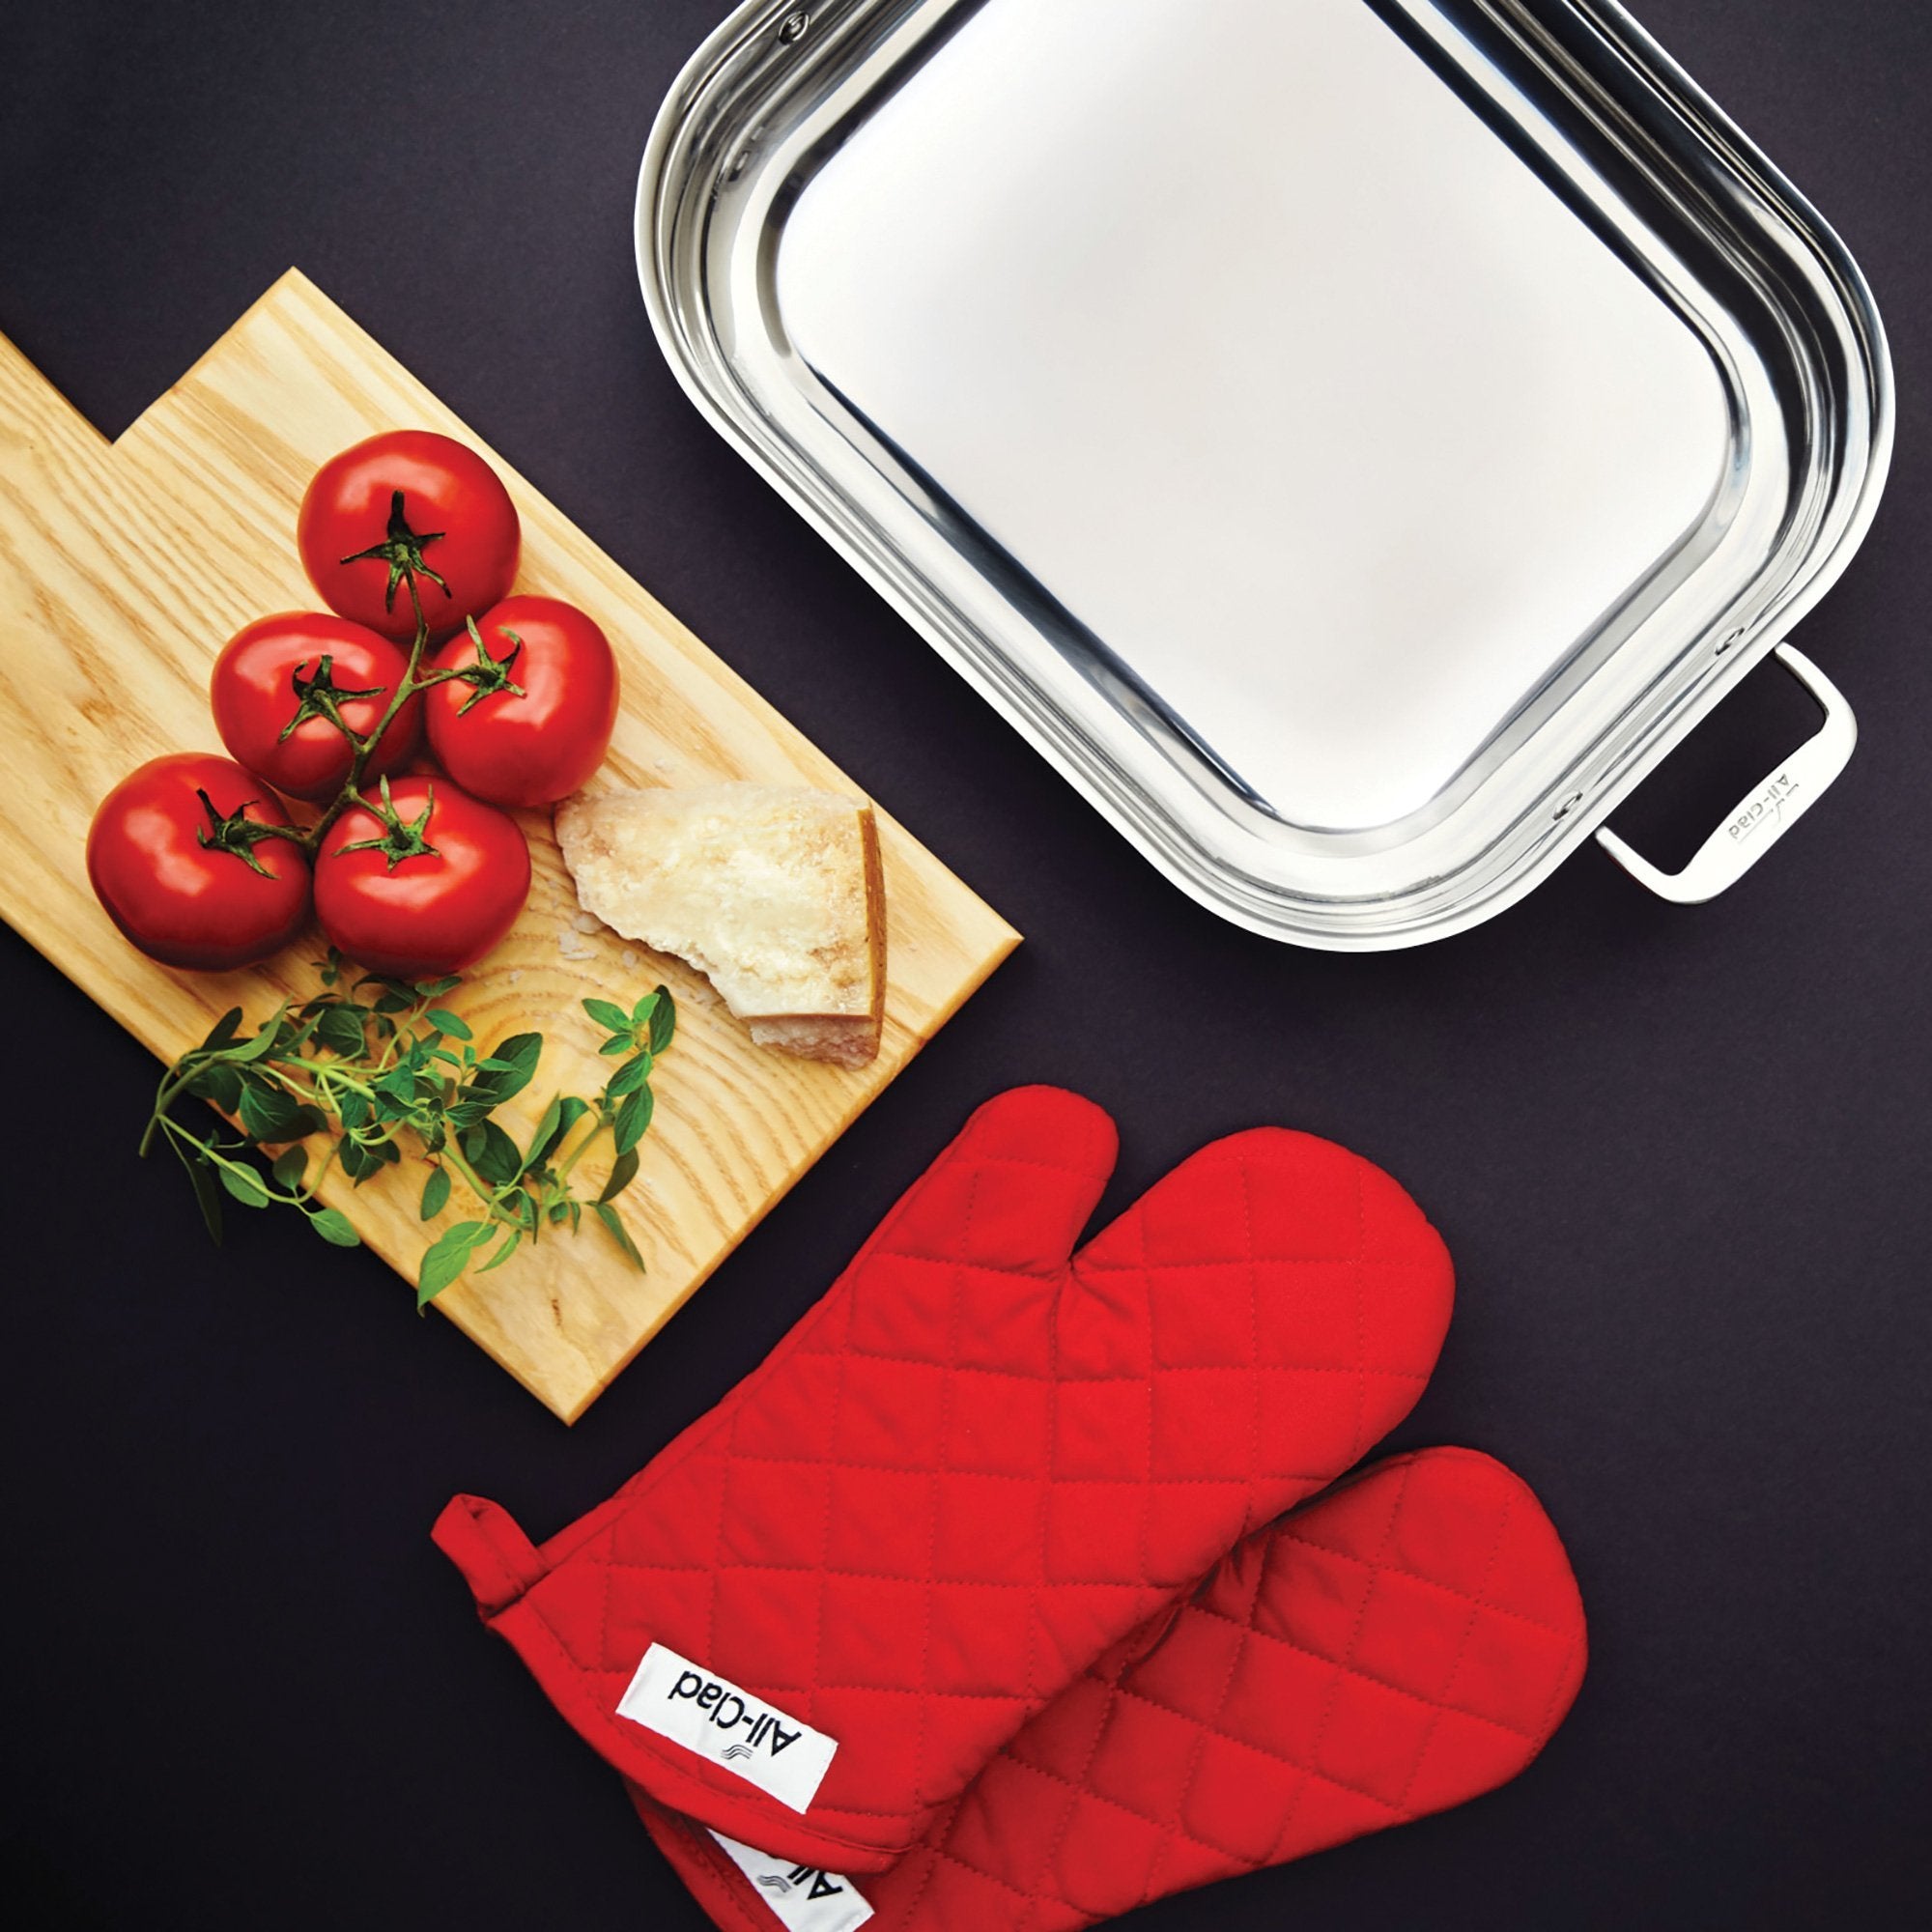 All-Clad Stainless Steel Lasagna Pan Gift Set - Kitchen Smart